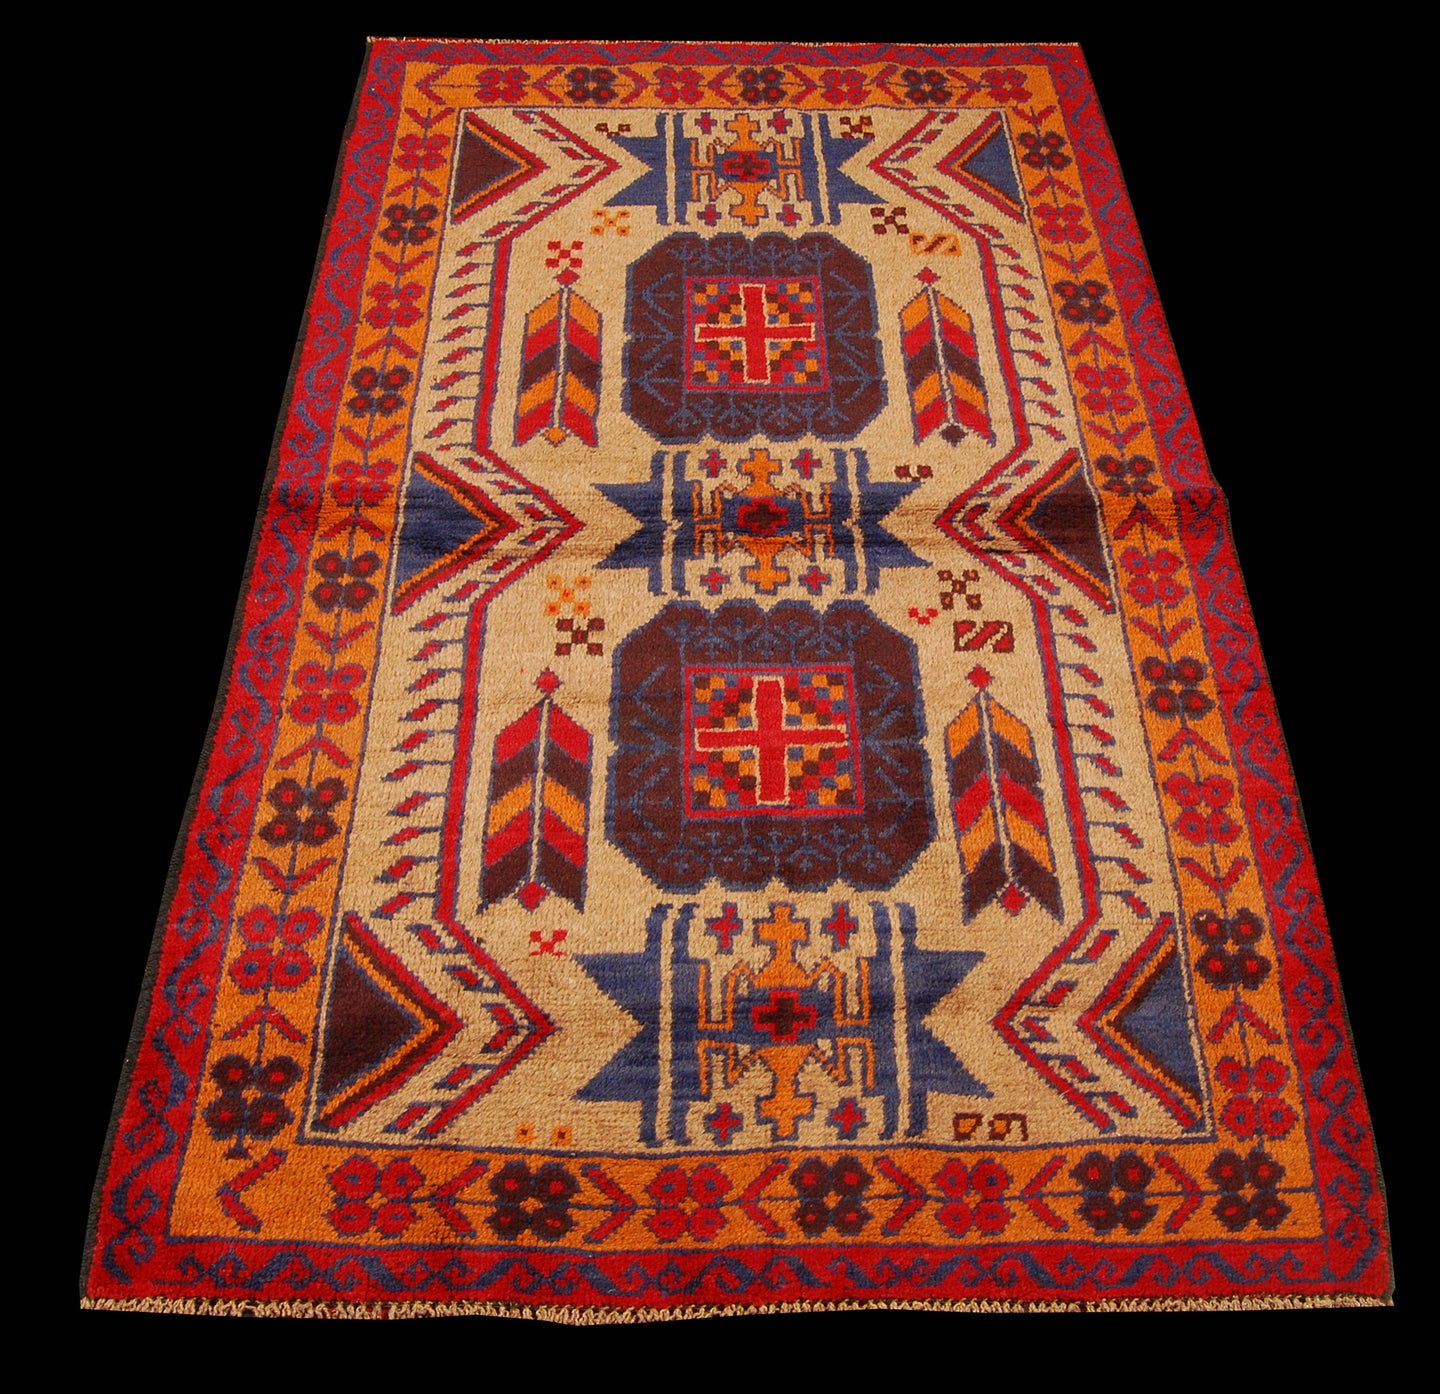 Genuine, Original Pure Wool Rug Rustic Handmad Carpet CM 185x105